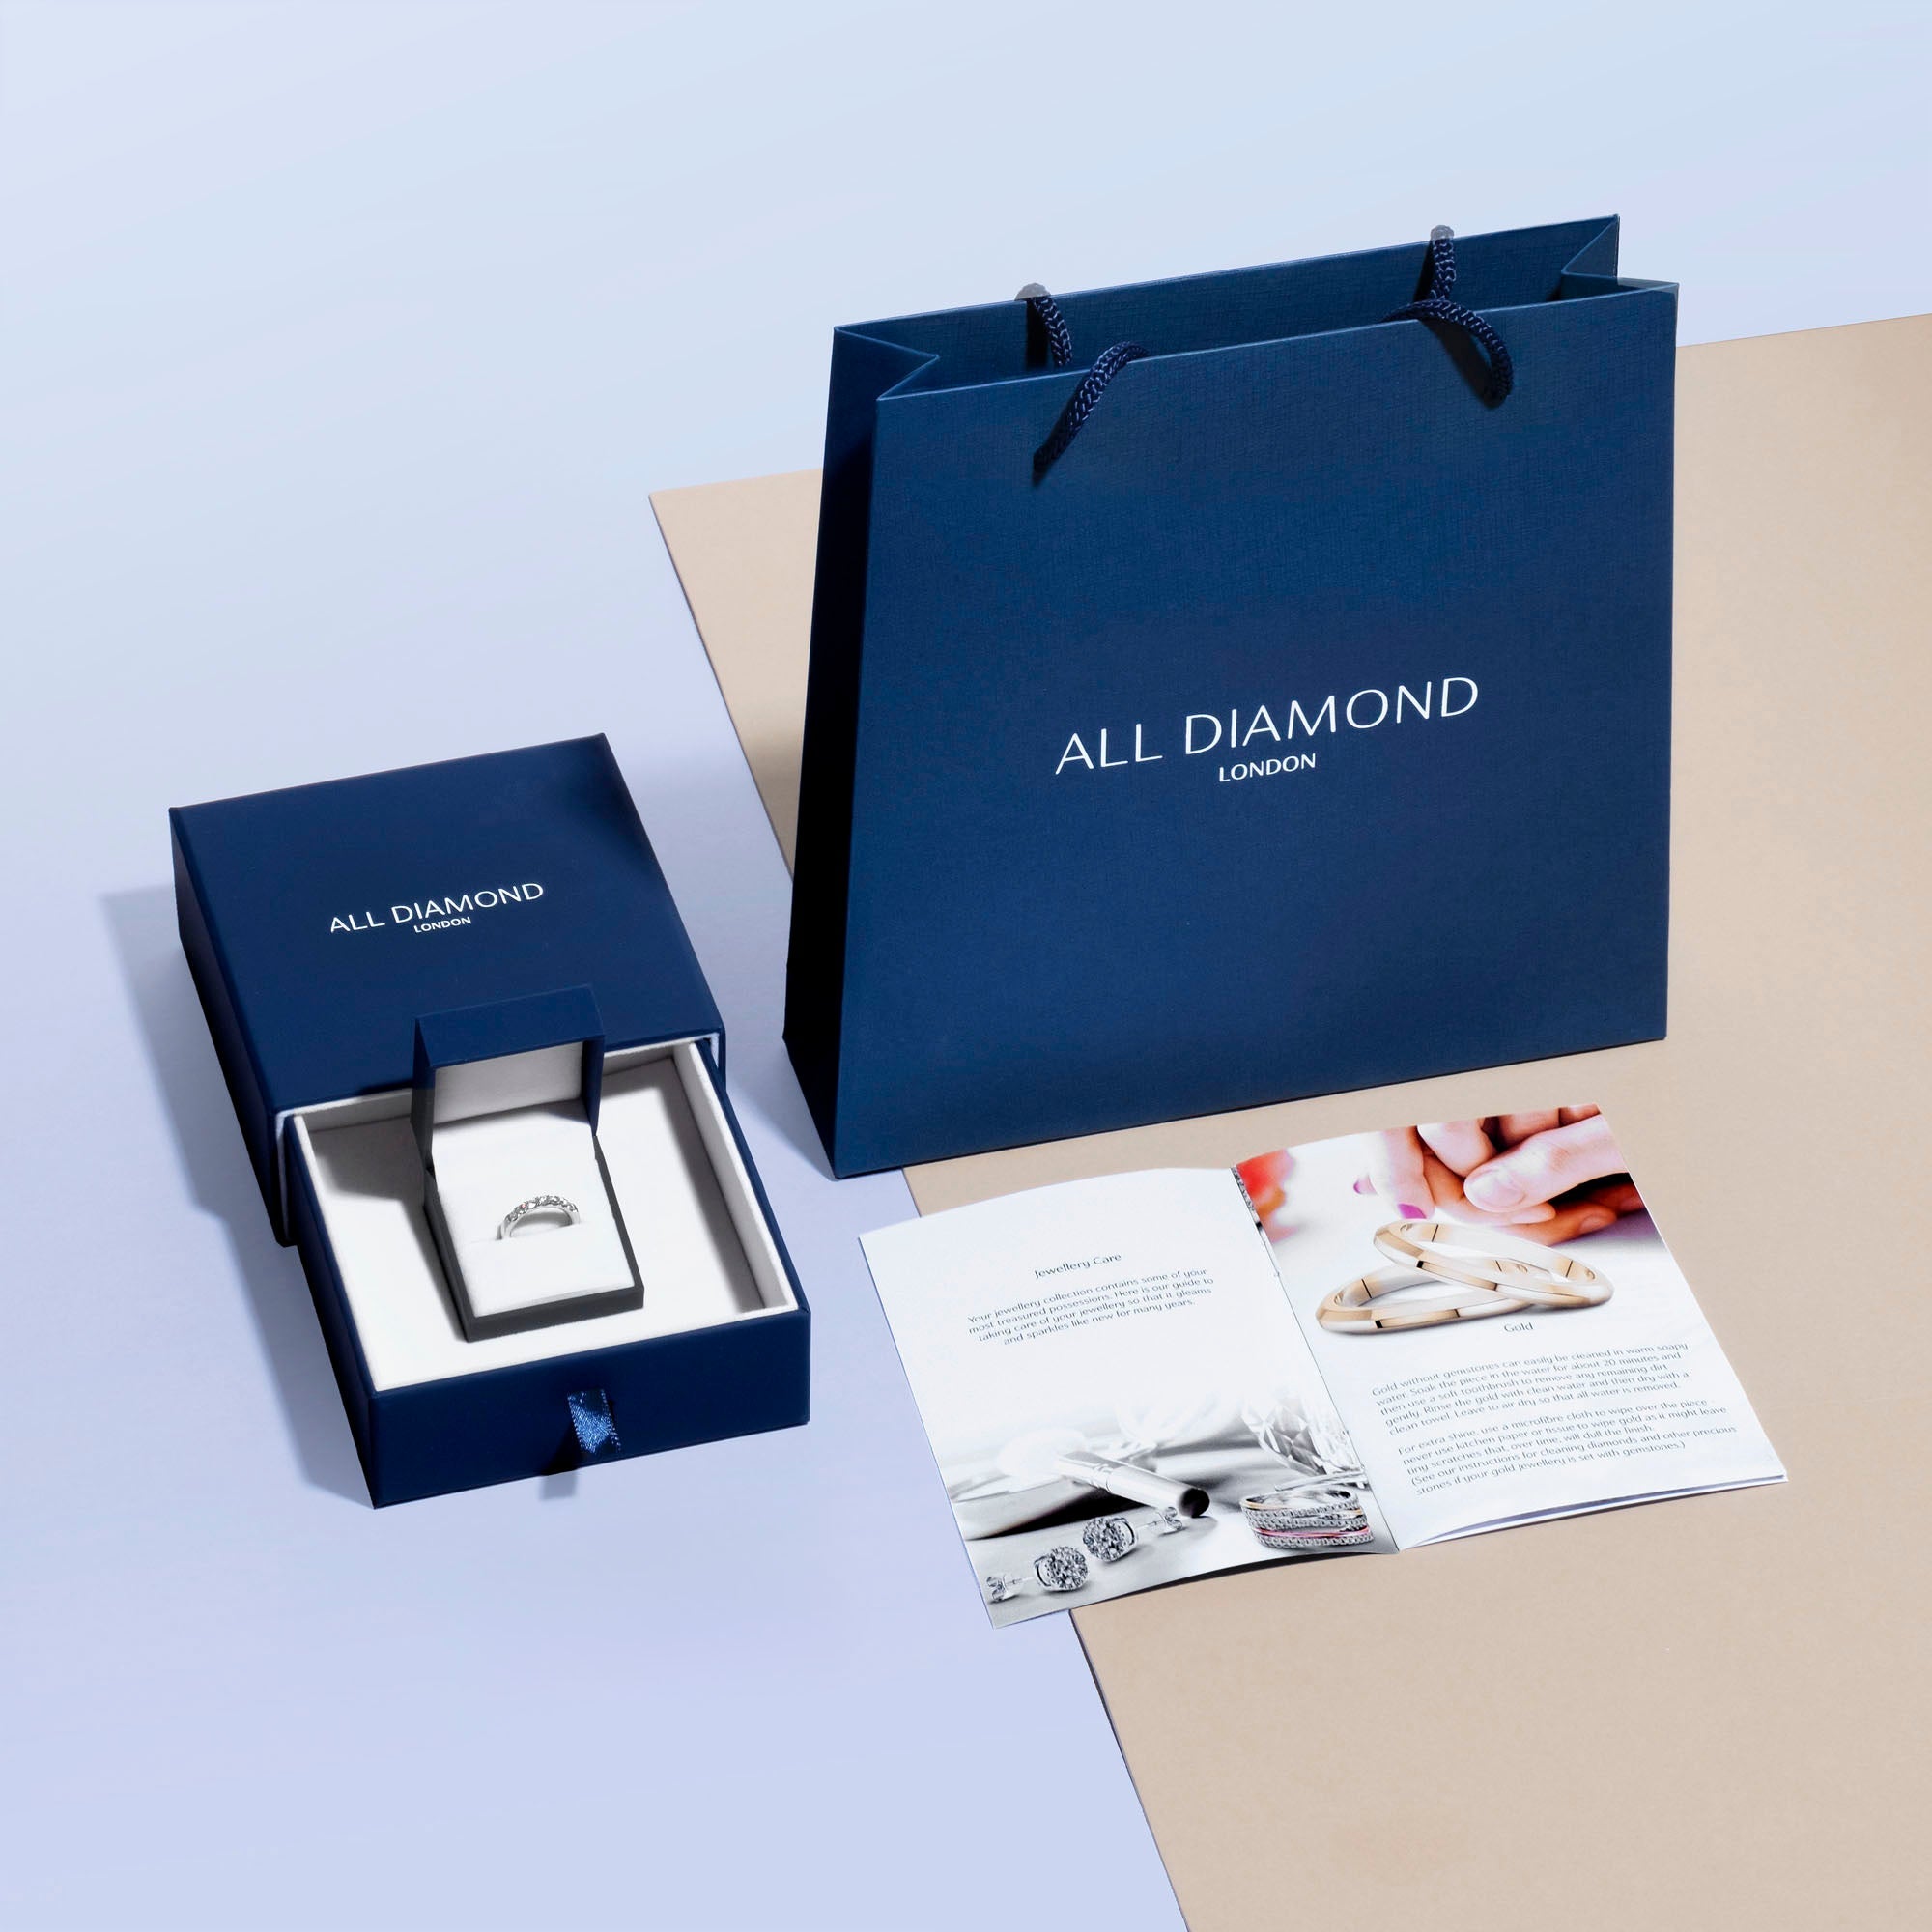 Diamond Baguette Half Eternity Ring 0.40ct G/SI in Platinum 2.3mm - All Diamond